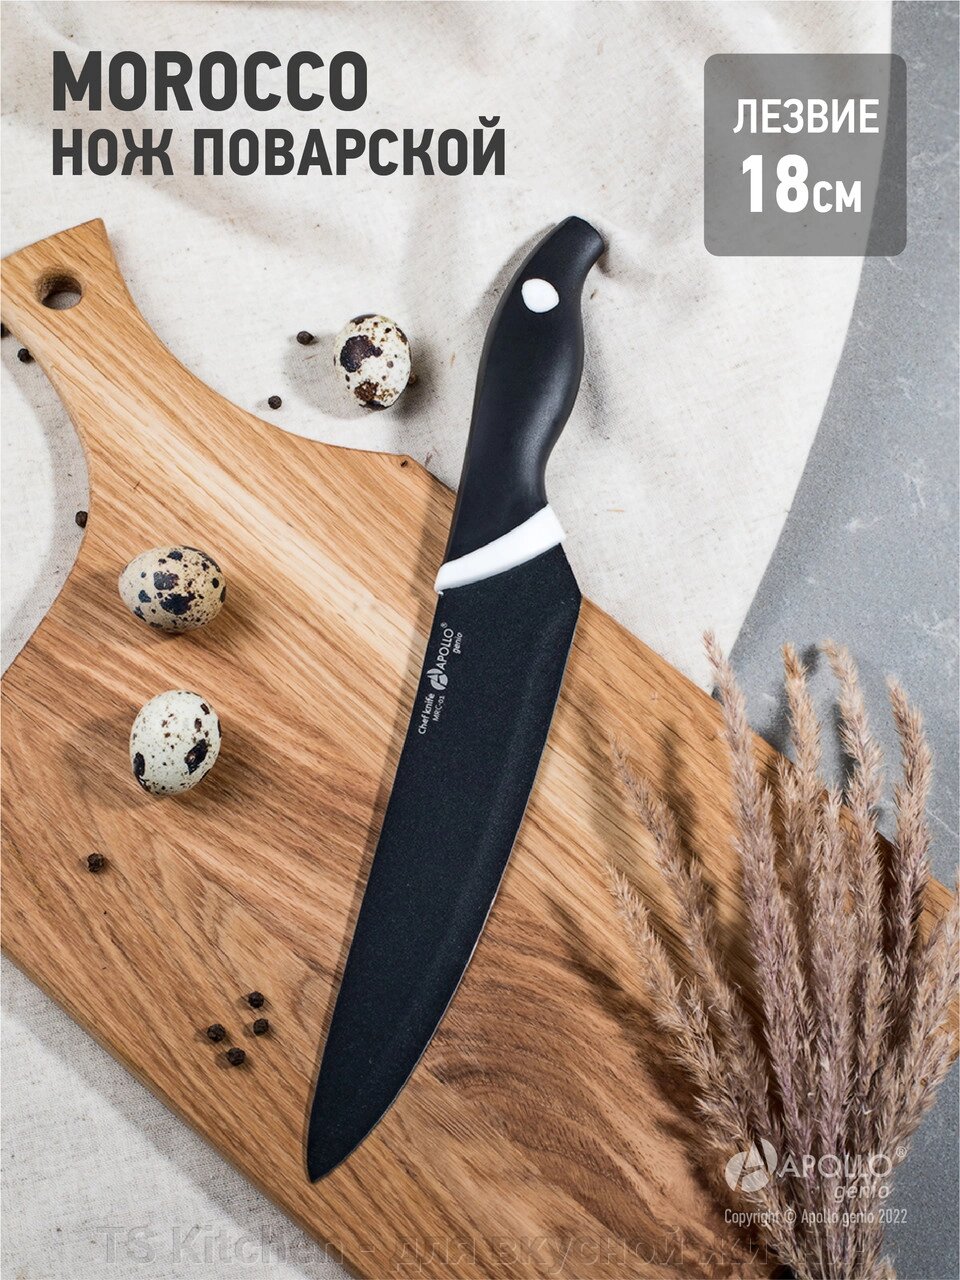 Нож поварской  Genio "Morocco" MRC-01/APOLLO от компании TS Kitchen - для вкусной жизни! - фото 1